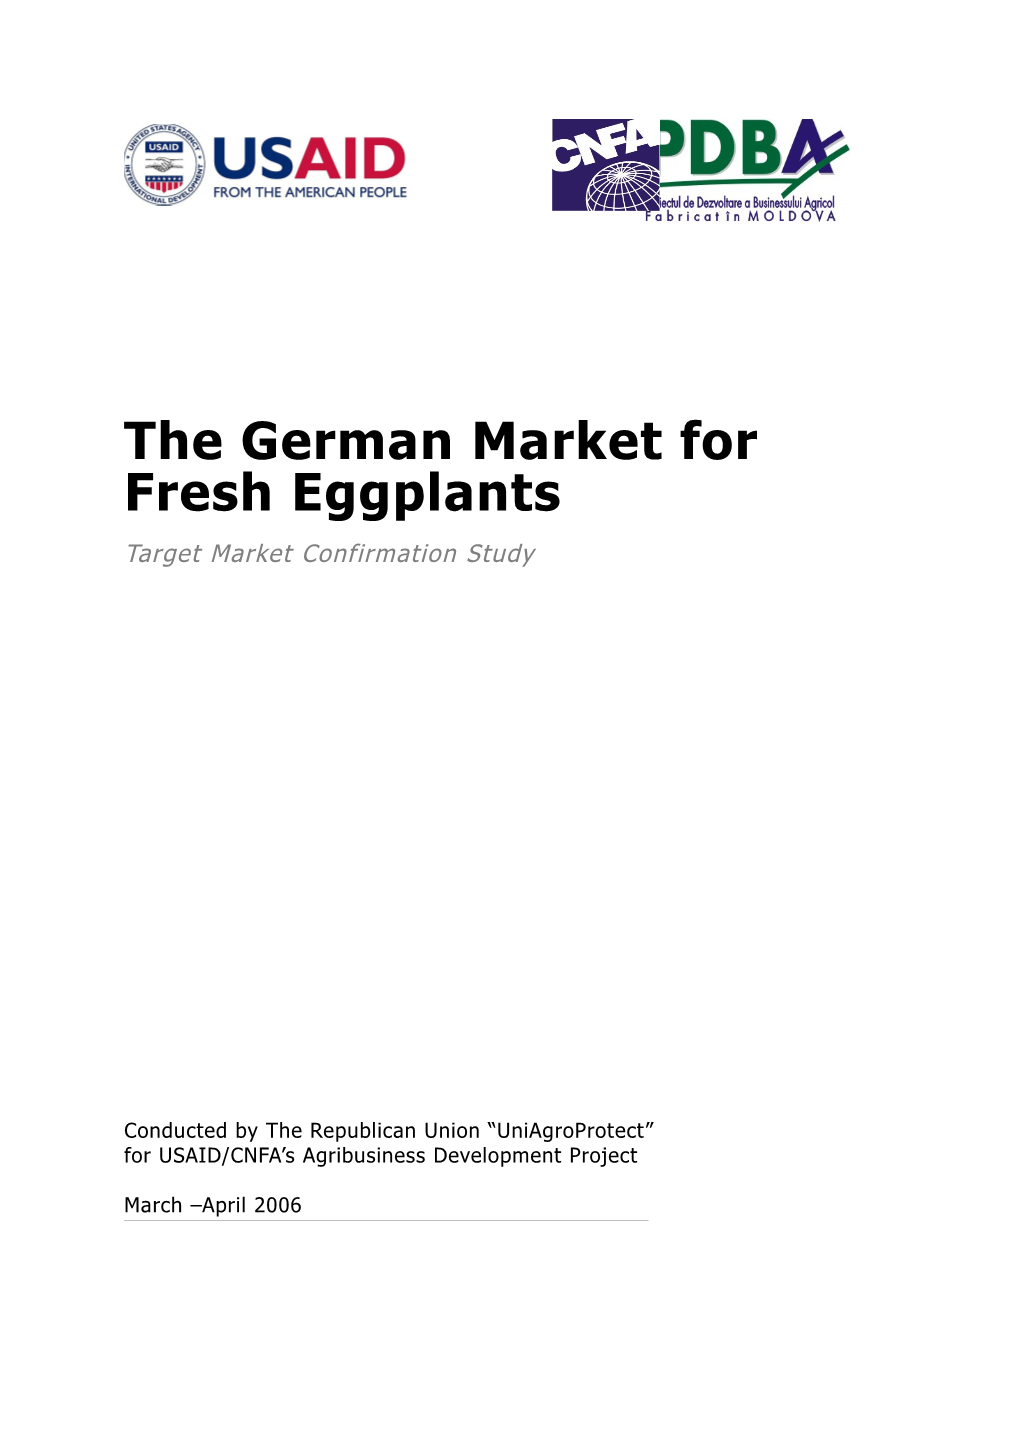 The German Market for Fresh Eggplants